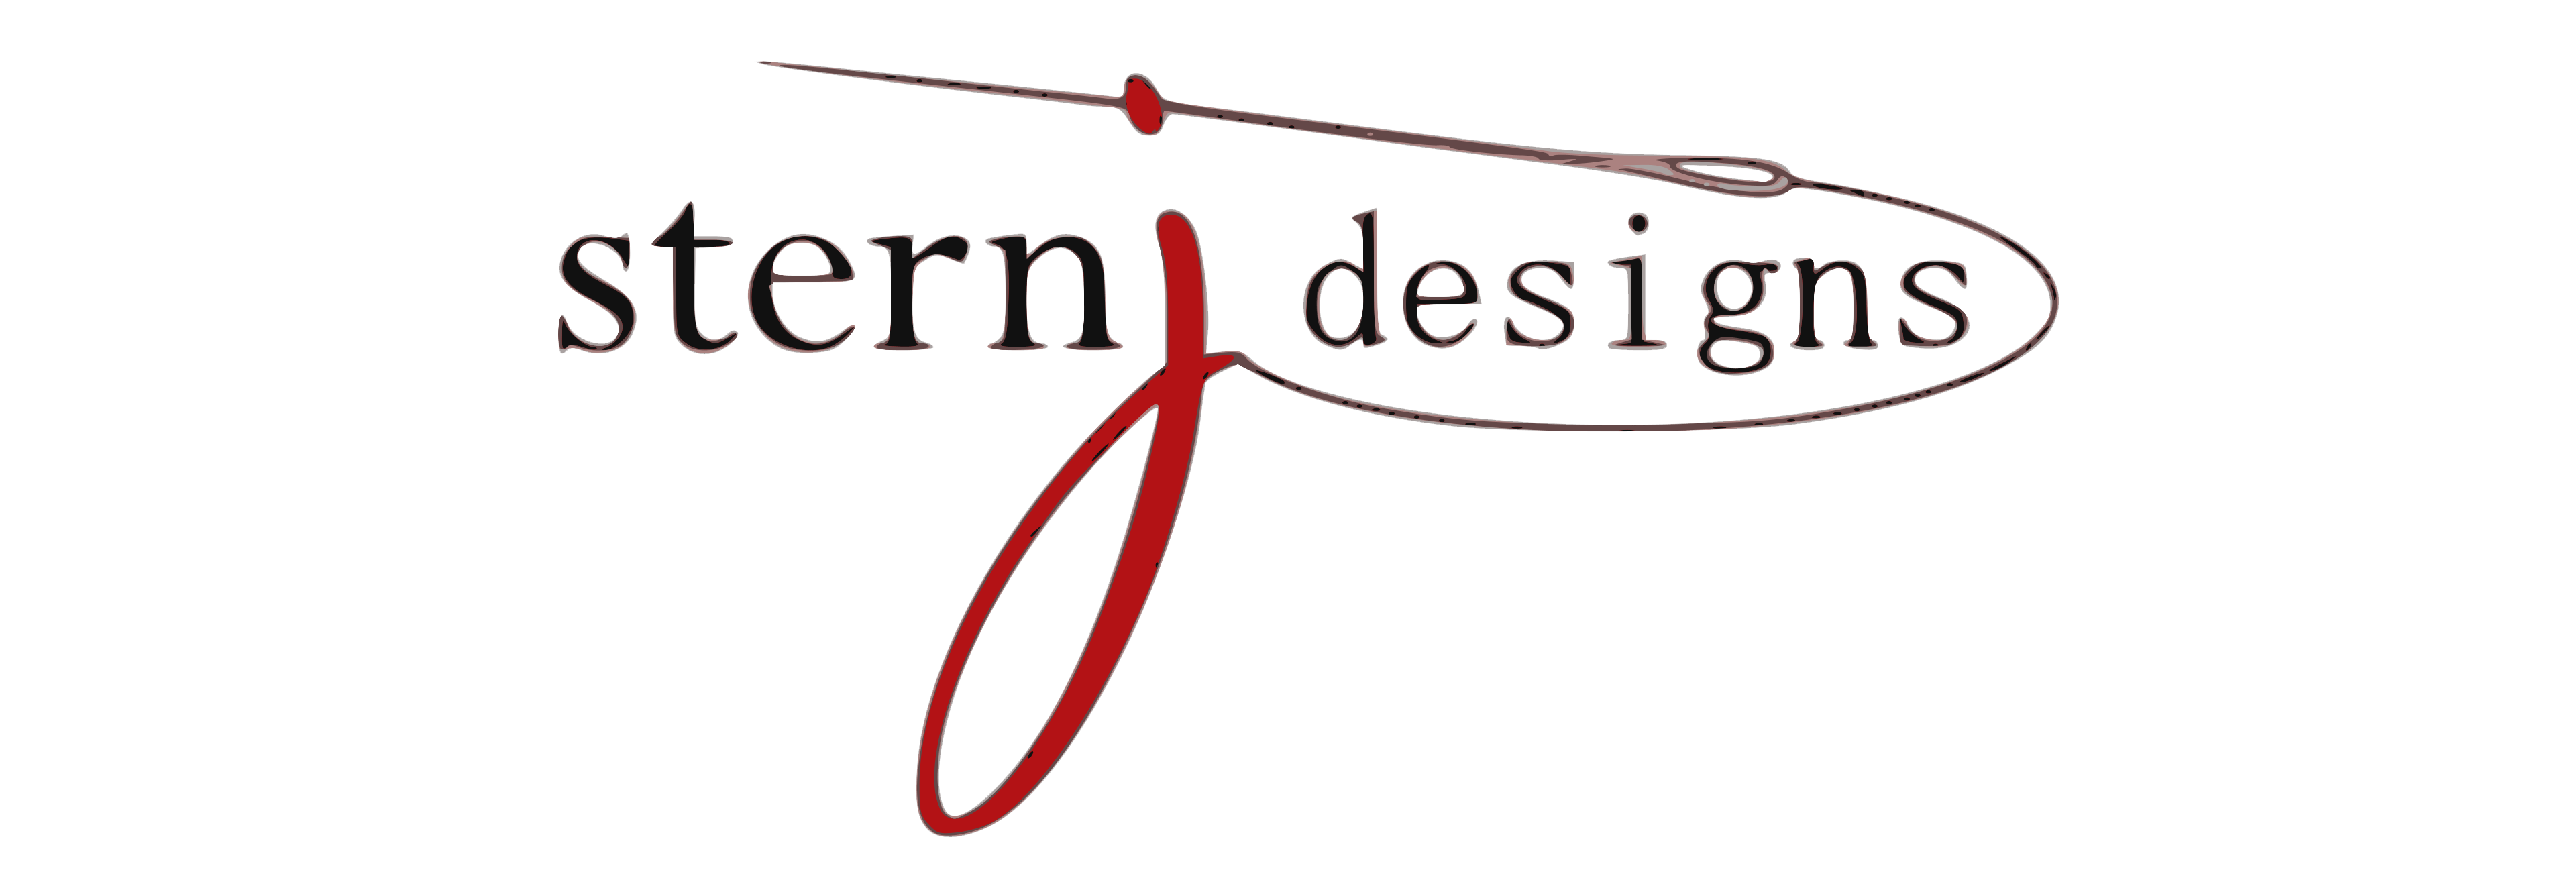 J Stern Designs